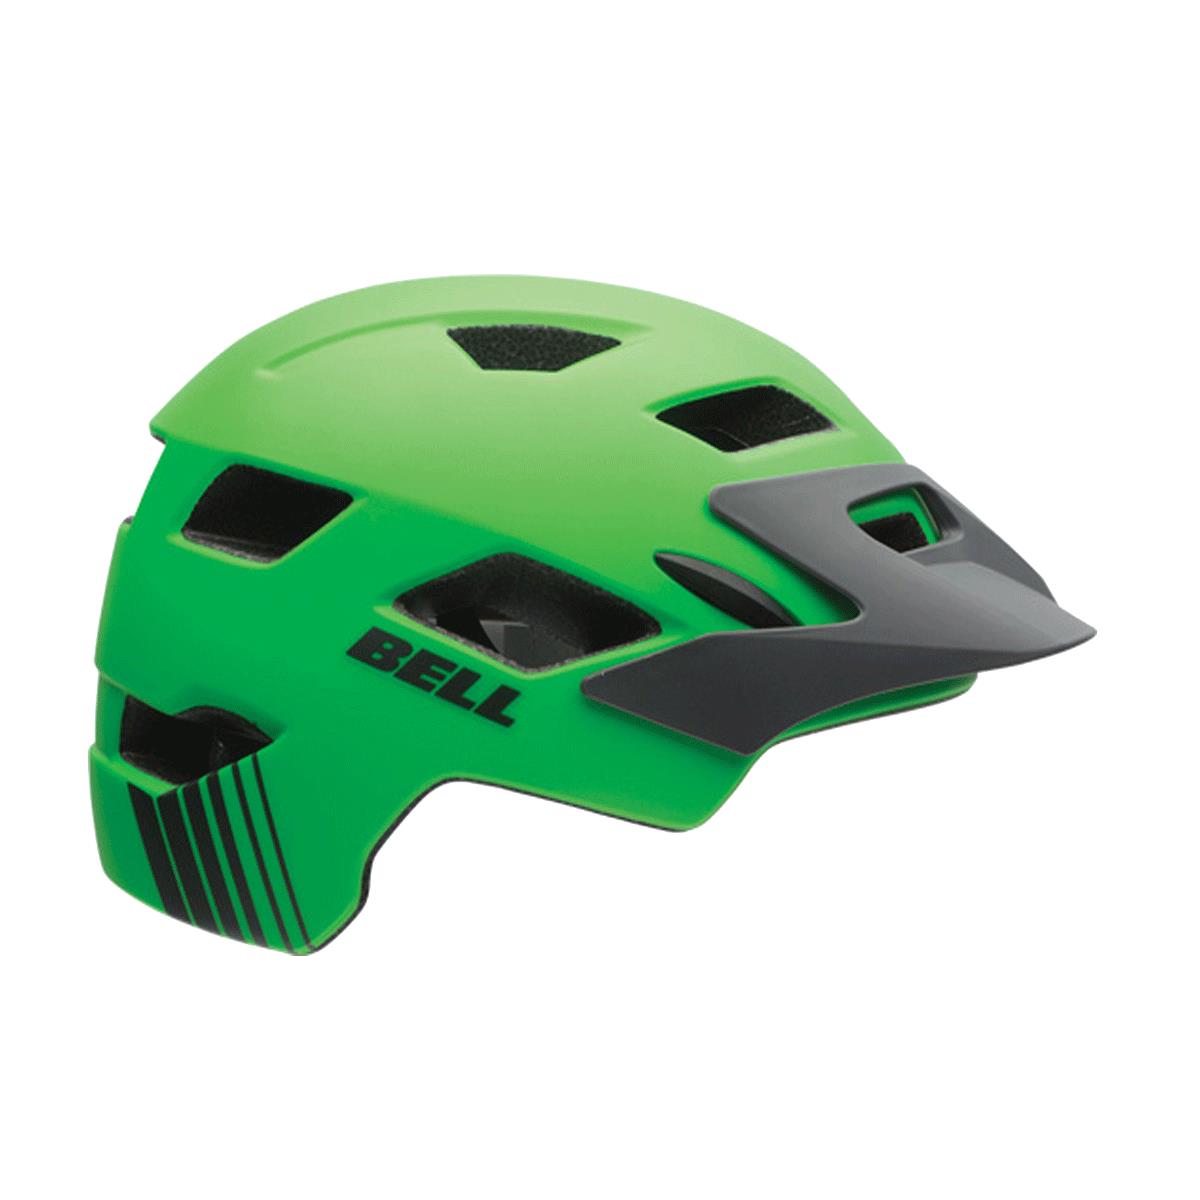 Bell Sidetrack Youth Bike Helmet